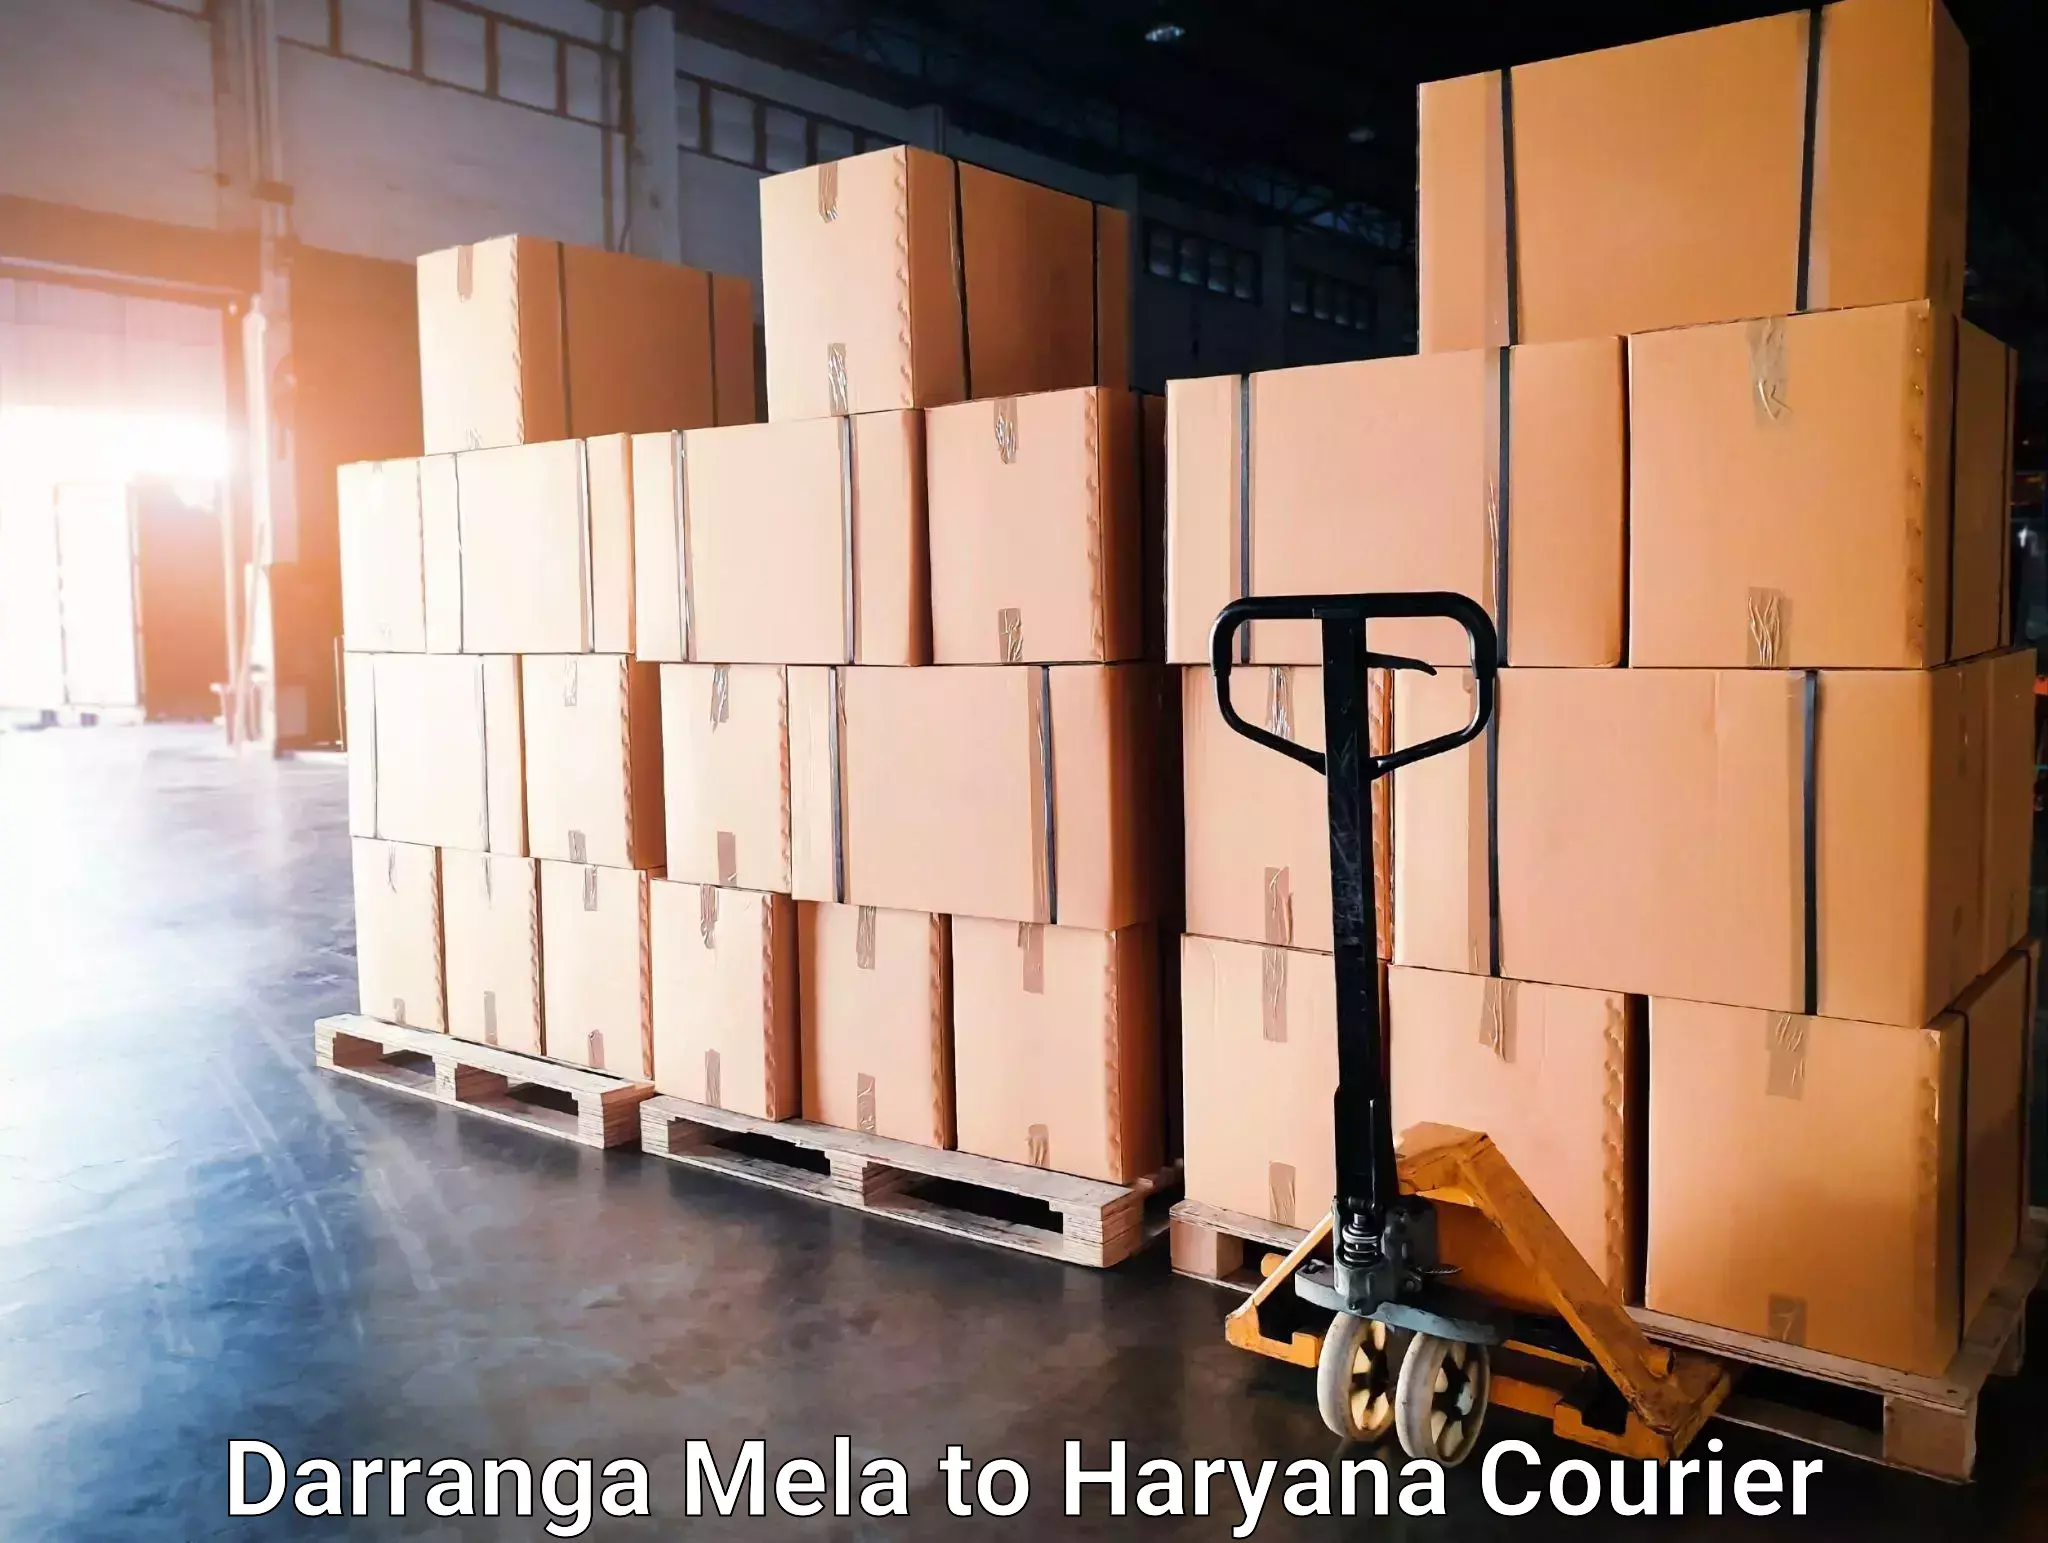 On-demand courier Darranga Mela to Odhan